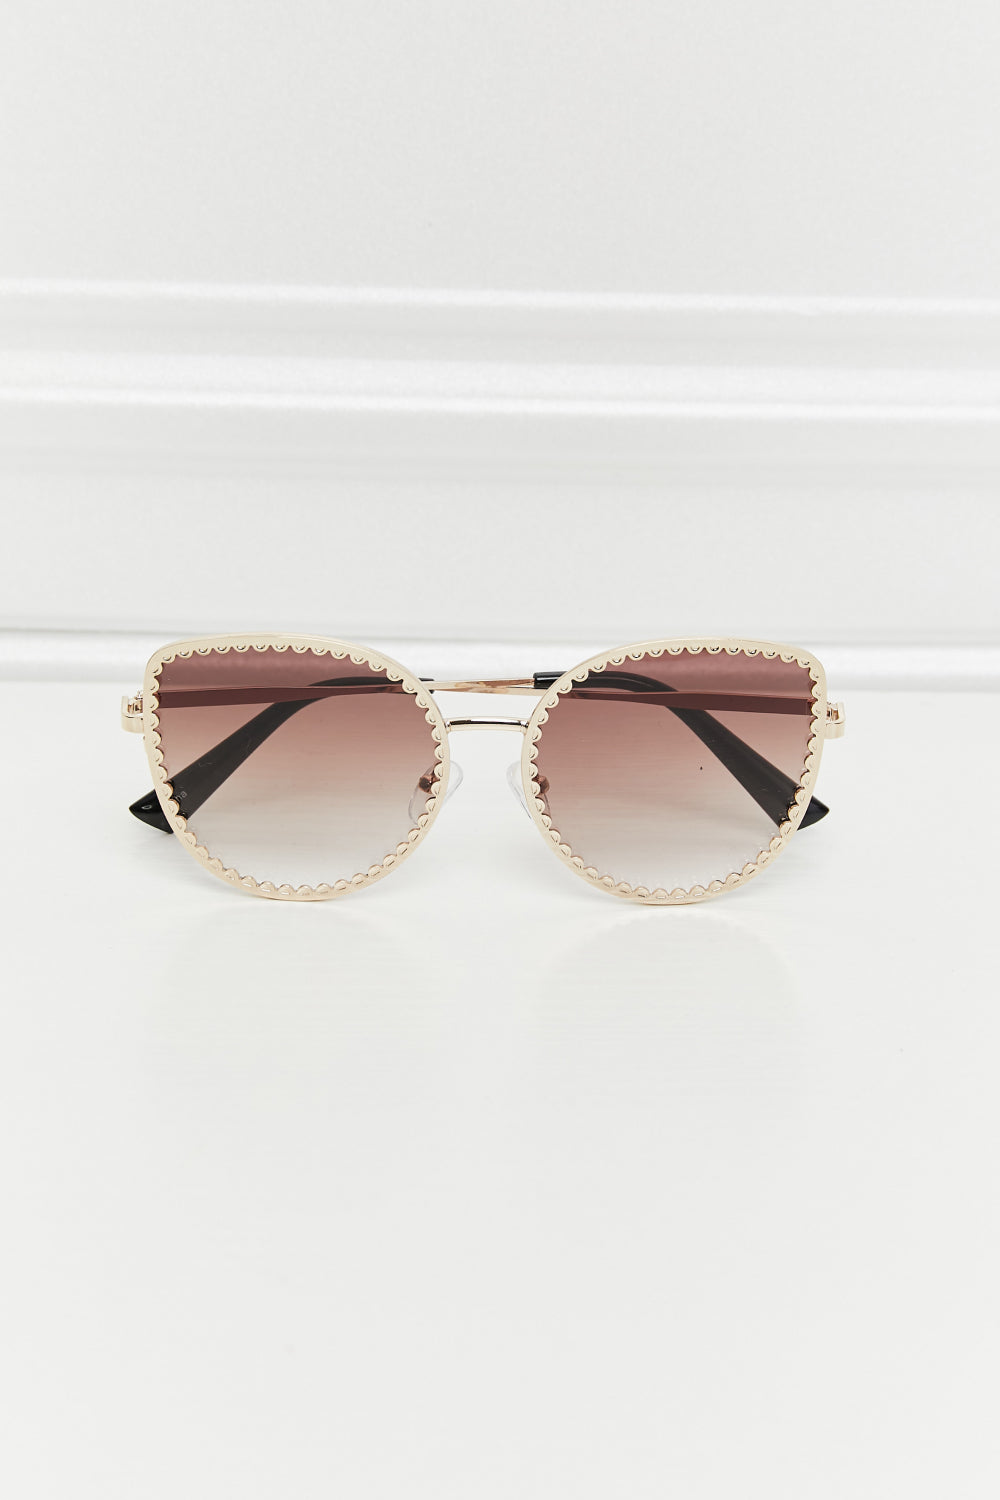 - Full Rim Metal Frame Sunglasses -2 colors - Sunglasses at TFC&H Co.